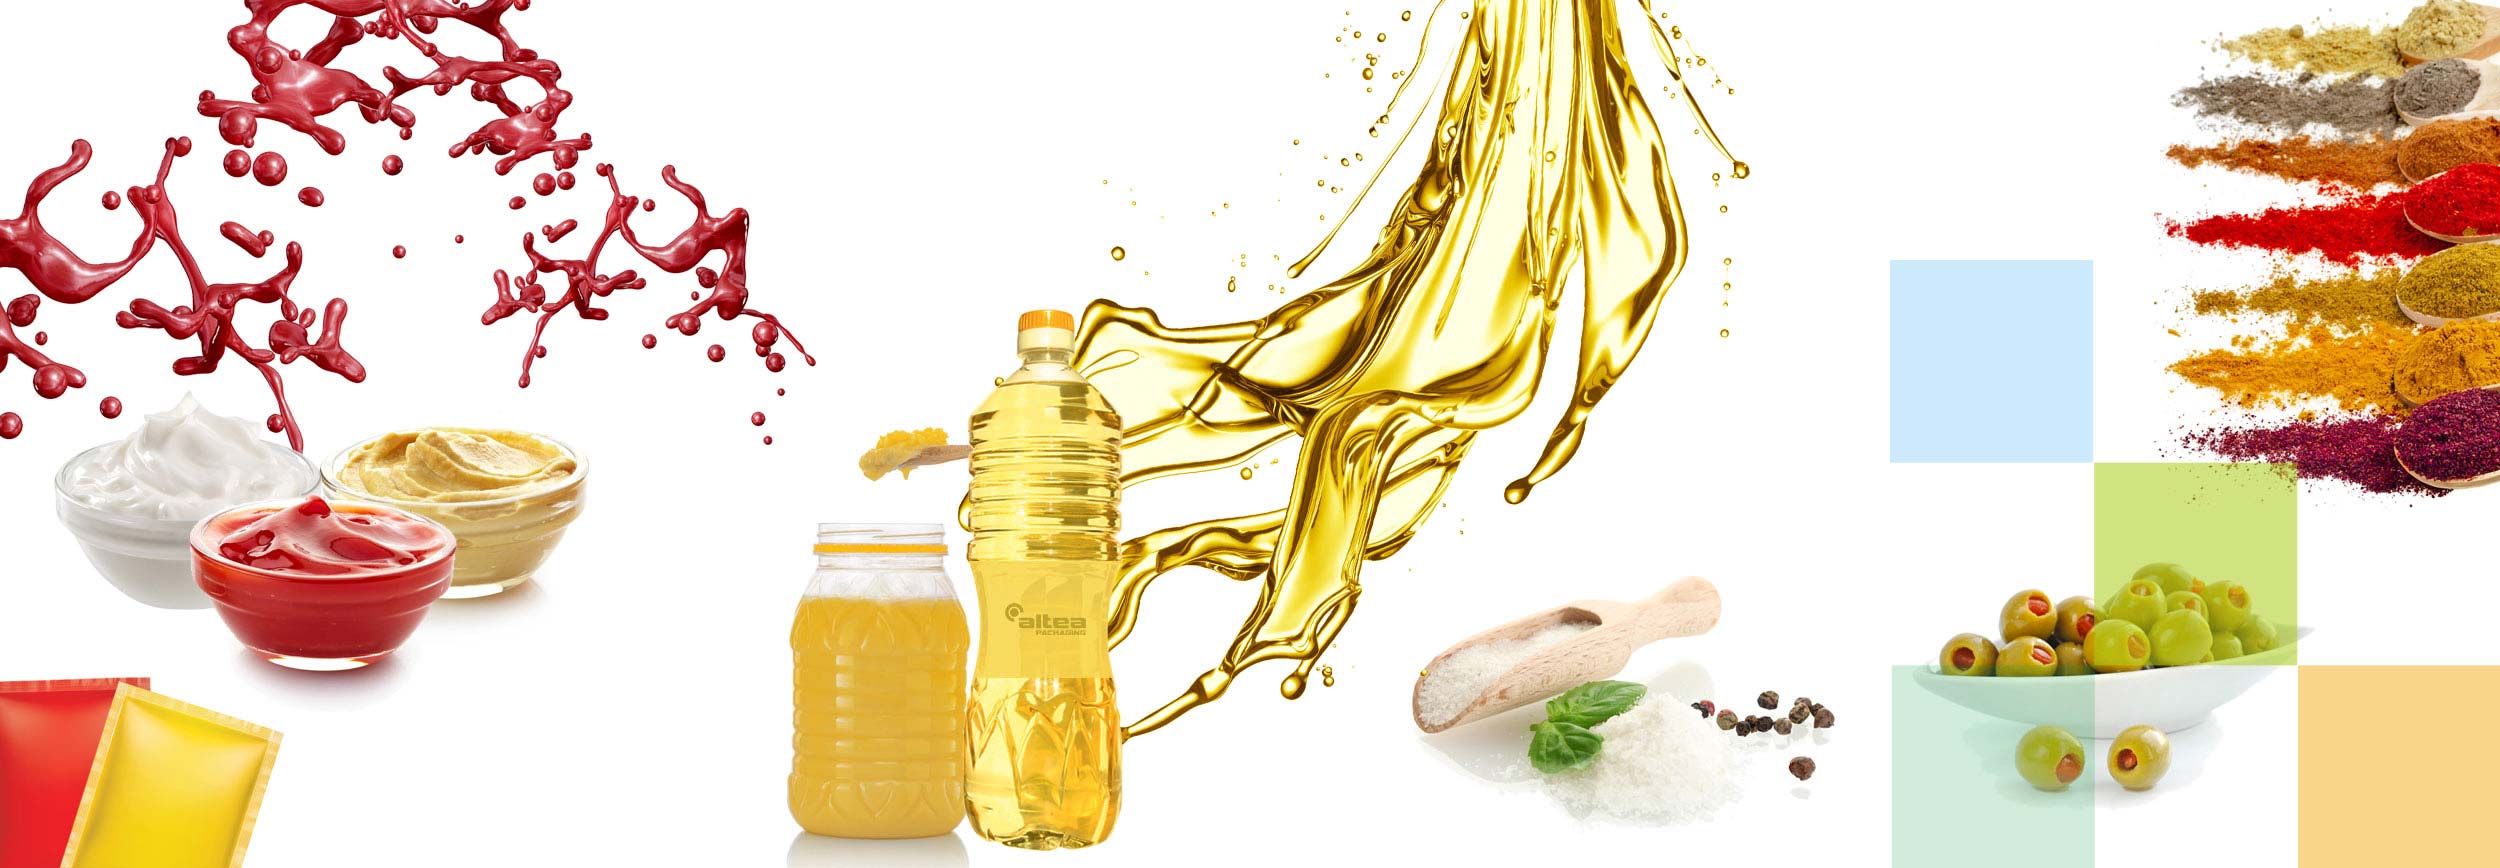 Emballage flexible, huiles et condiments